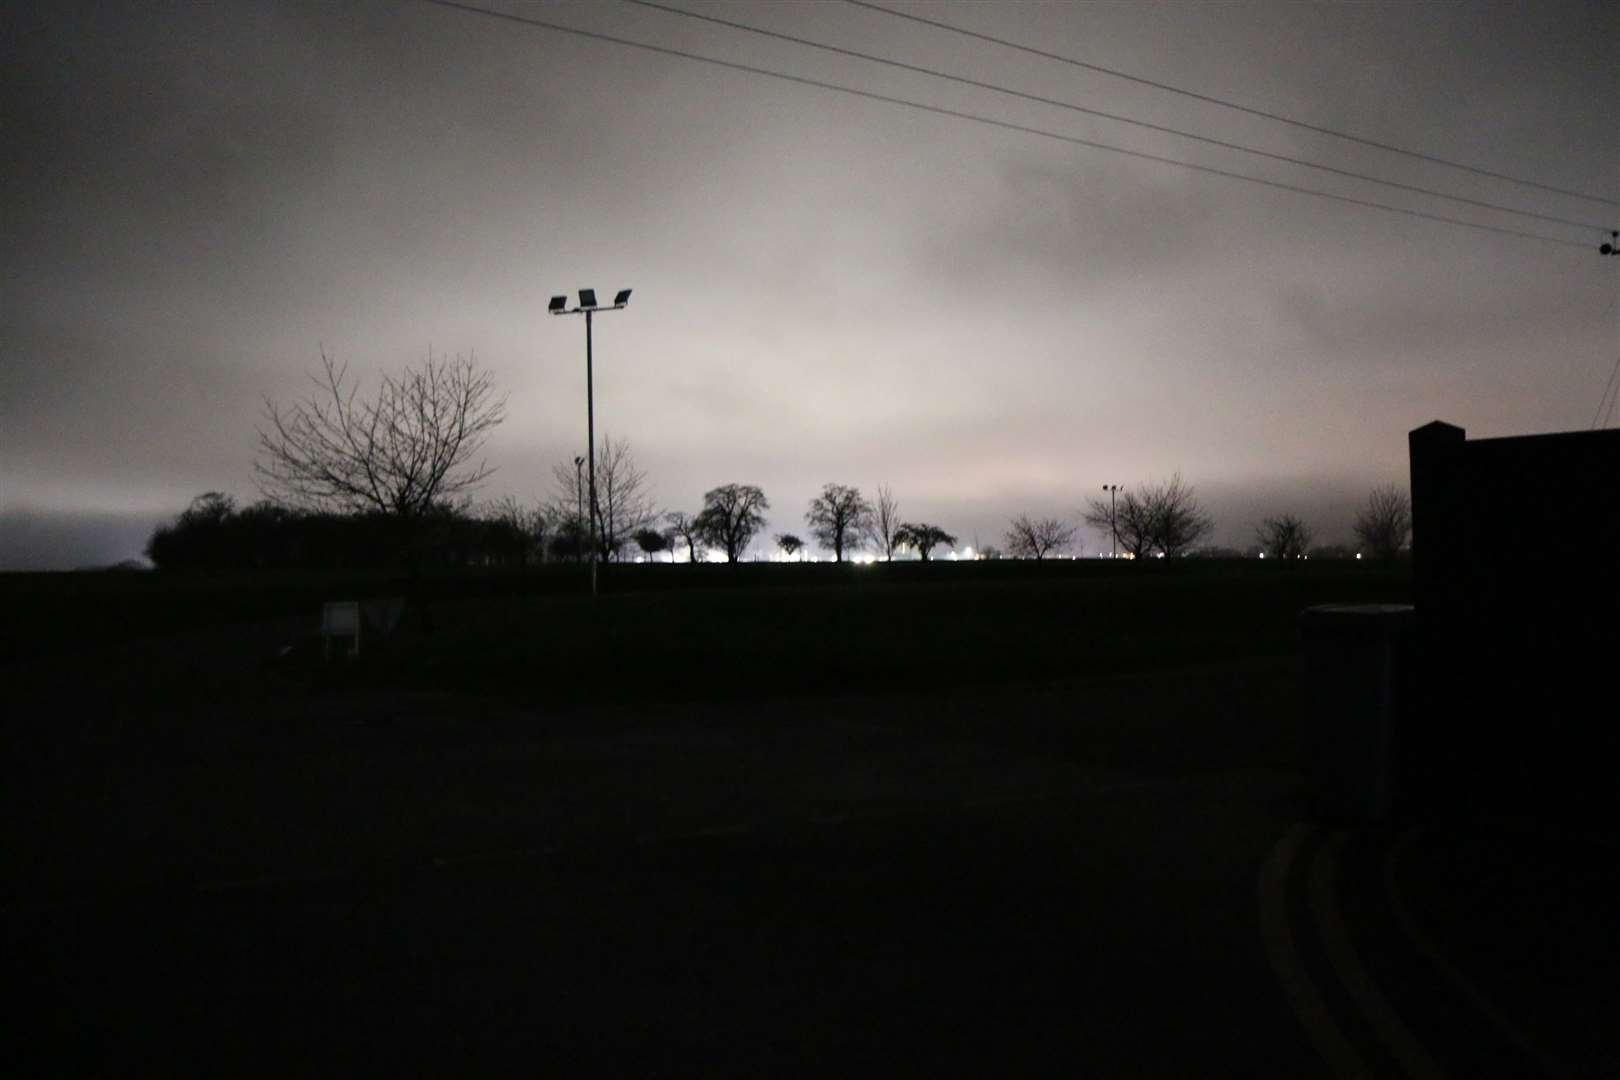 The night sky over Bury St Edmunds